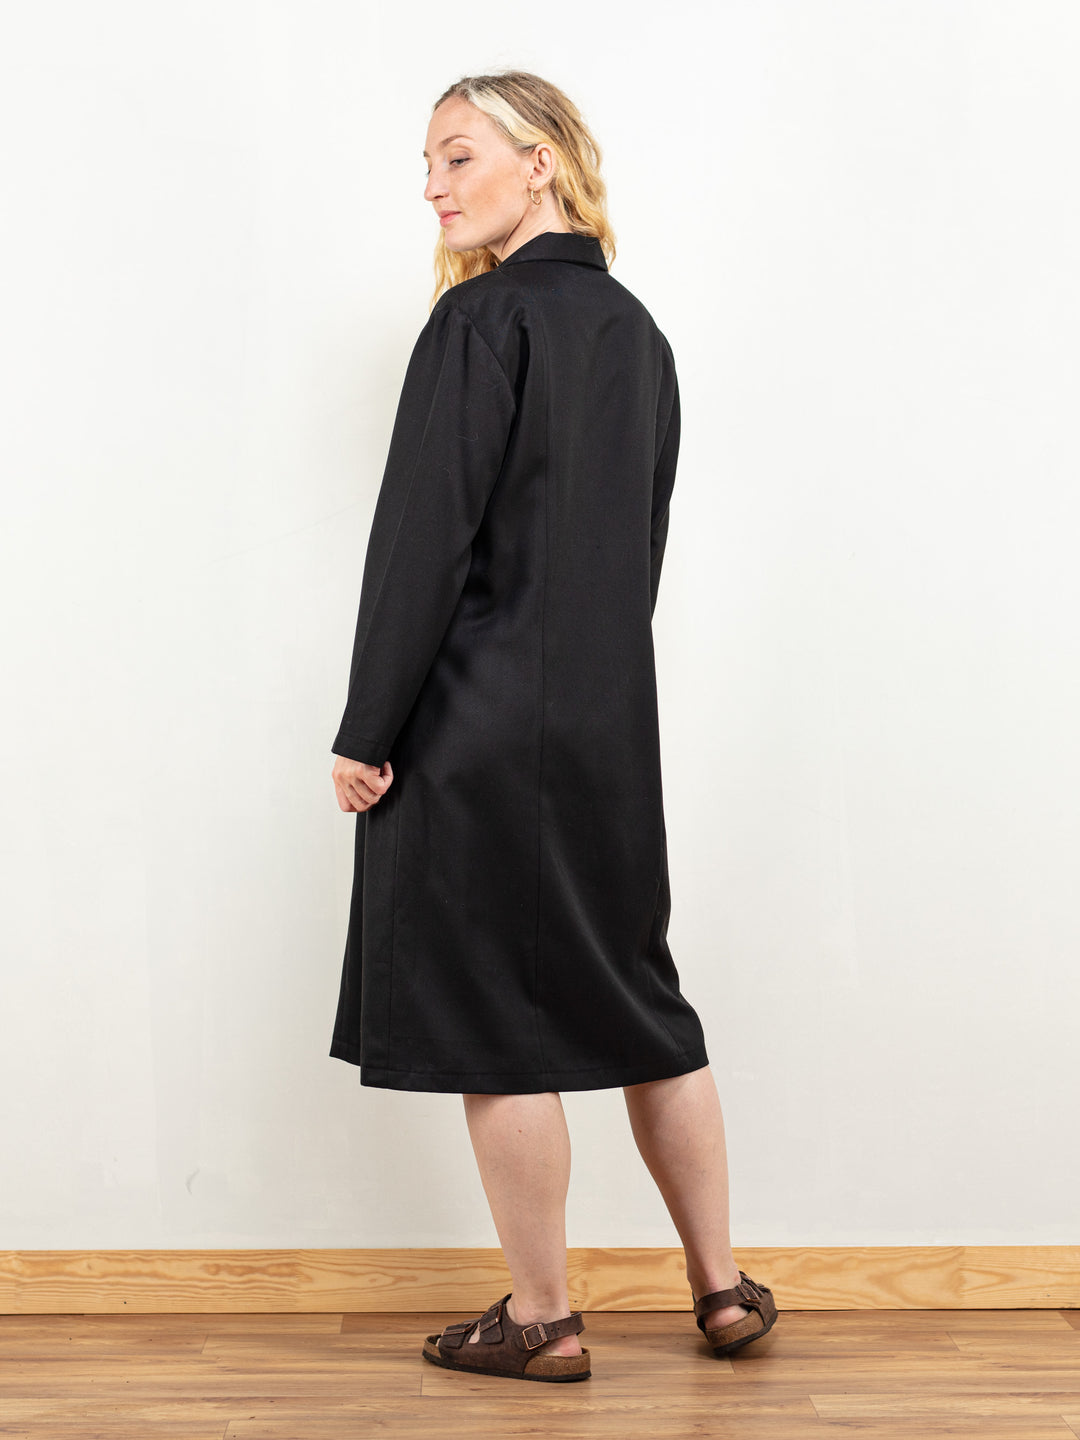 70s Black Dress handmade trench dress black aesthetic minimalist artist dress coat women retro wear oversized longline dress size medium